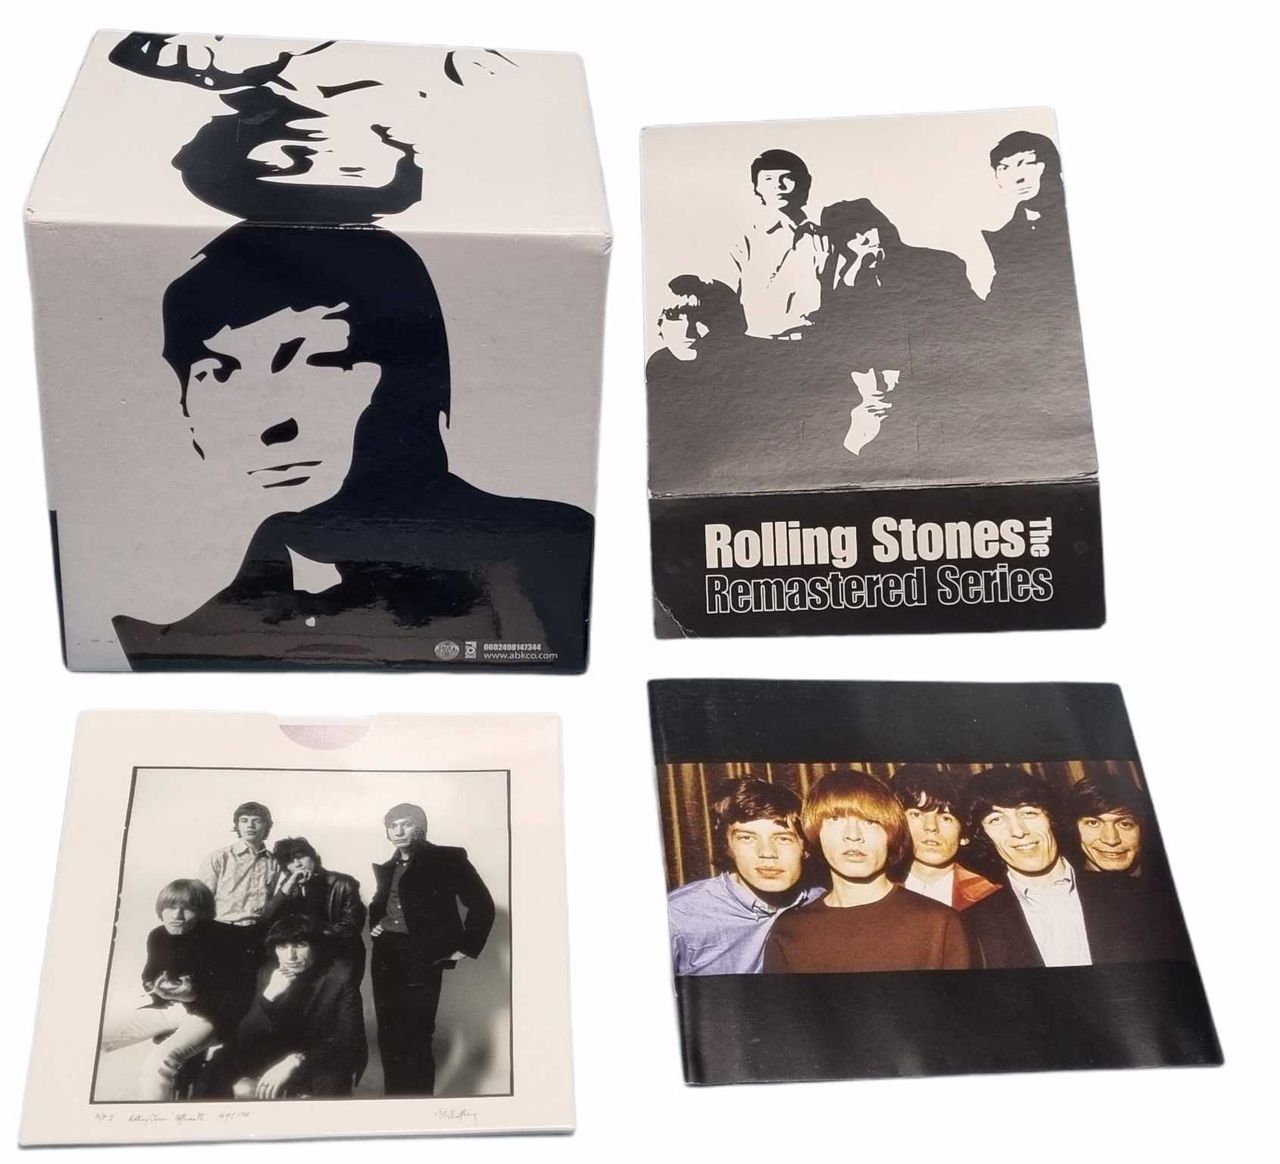 The Rolling Stones Remastered Series - Complete UK Cd album box set